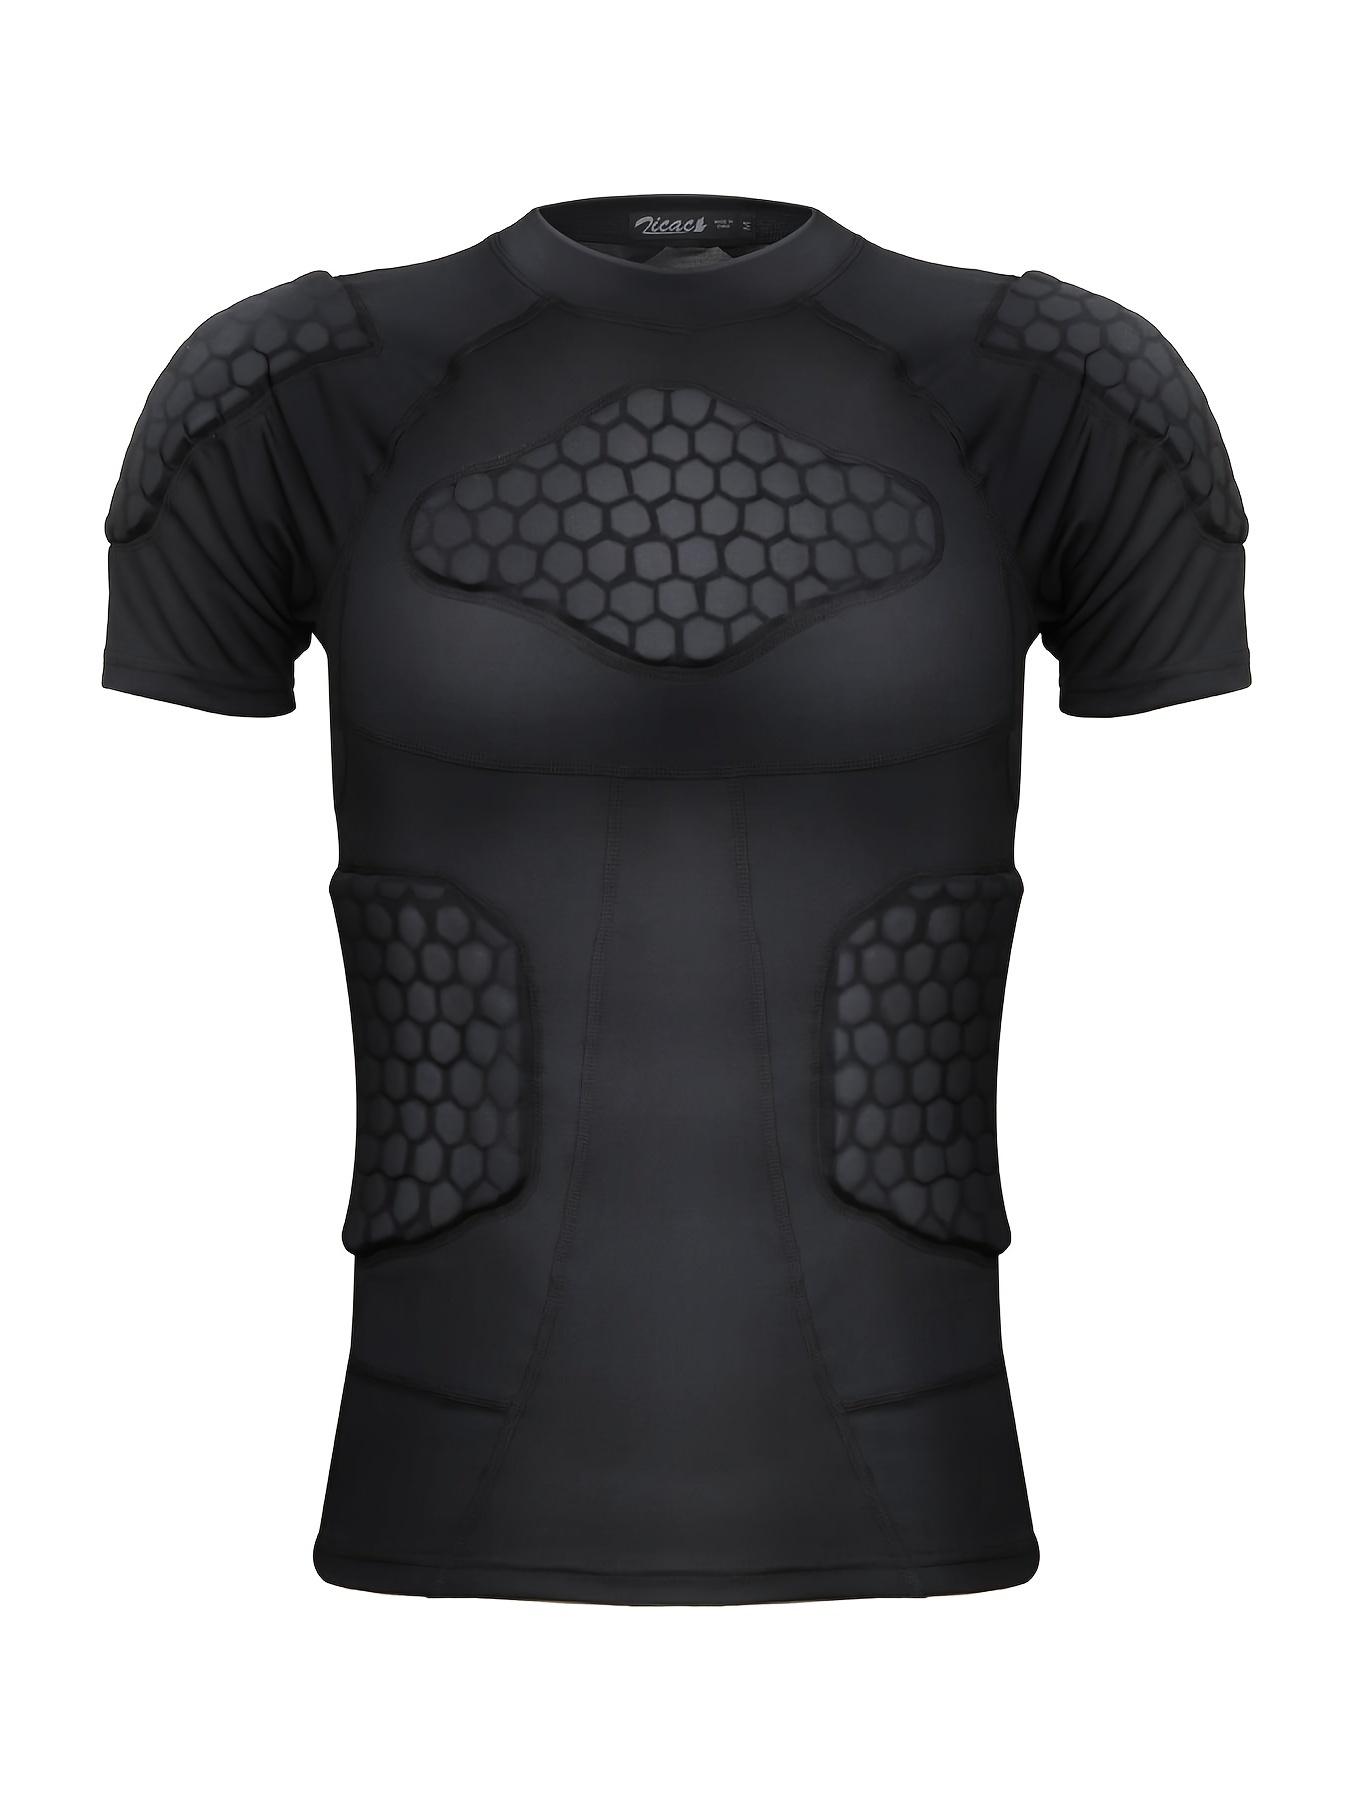 Men's Rib Protector Padded Vest Compression Shirt Training Vest